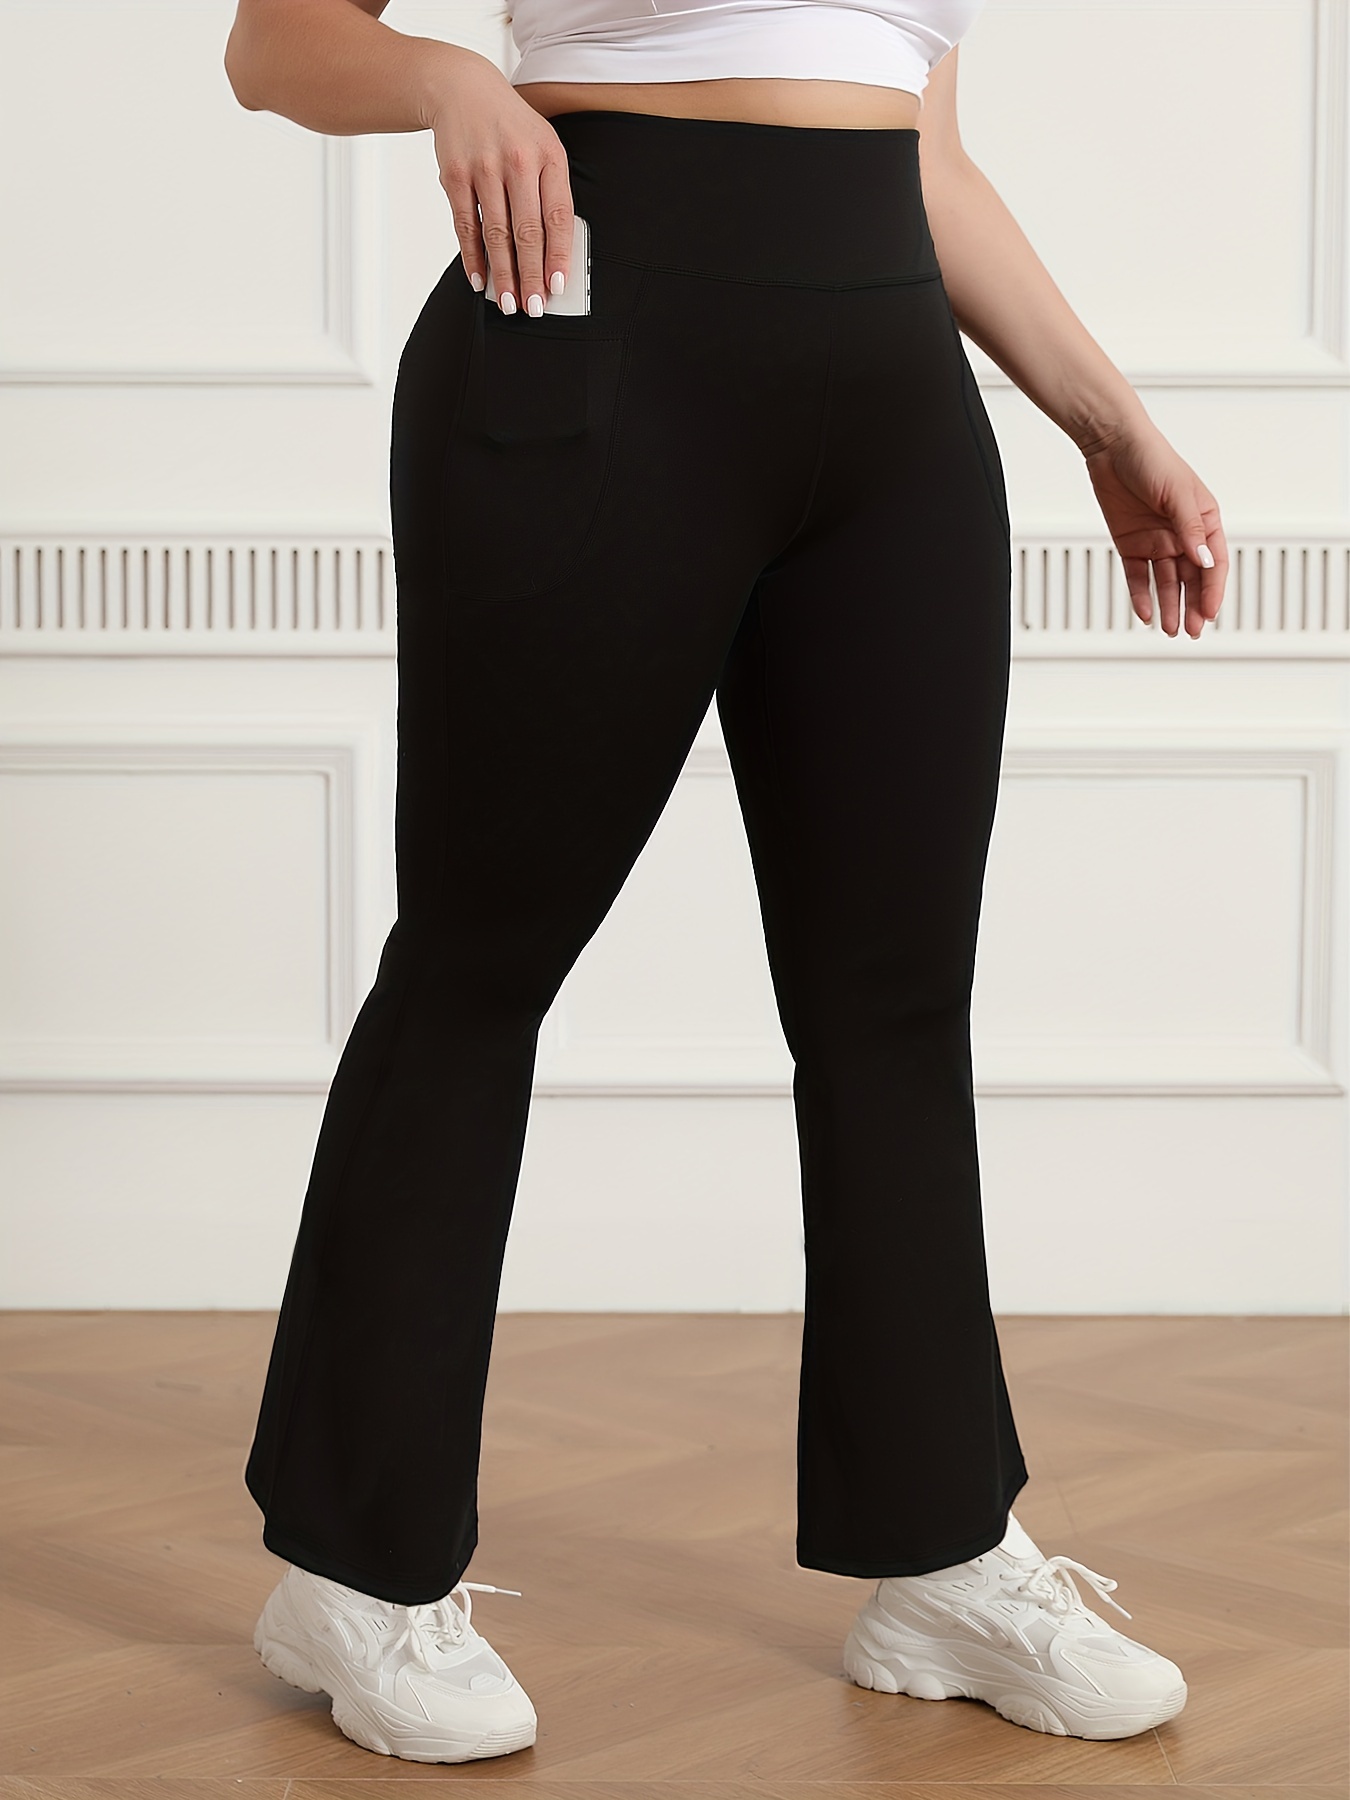 Plus Size Sports Pants Women's Plus Plain Black High Waisted